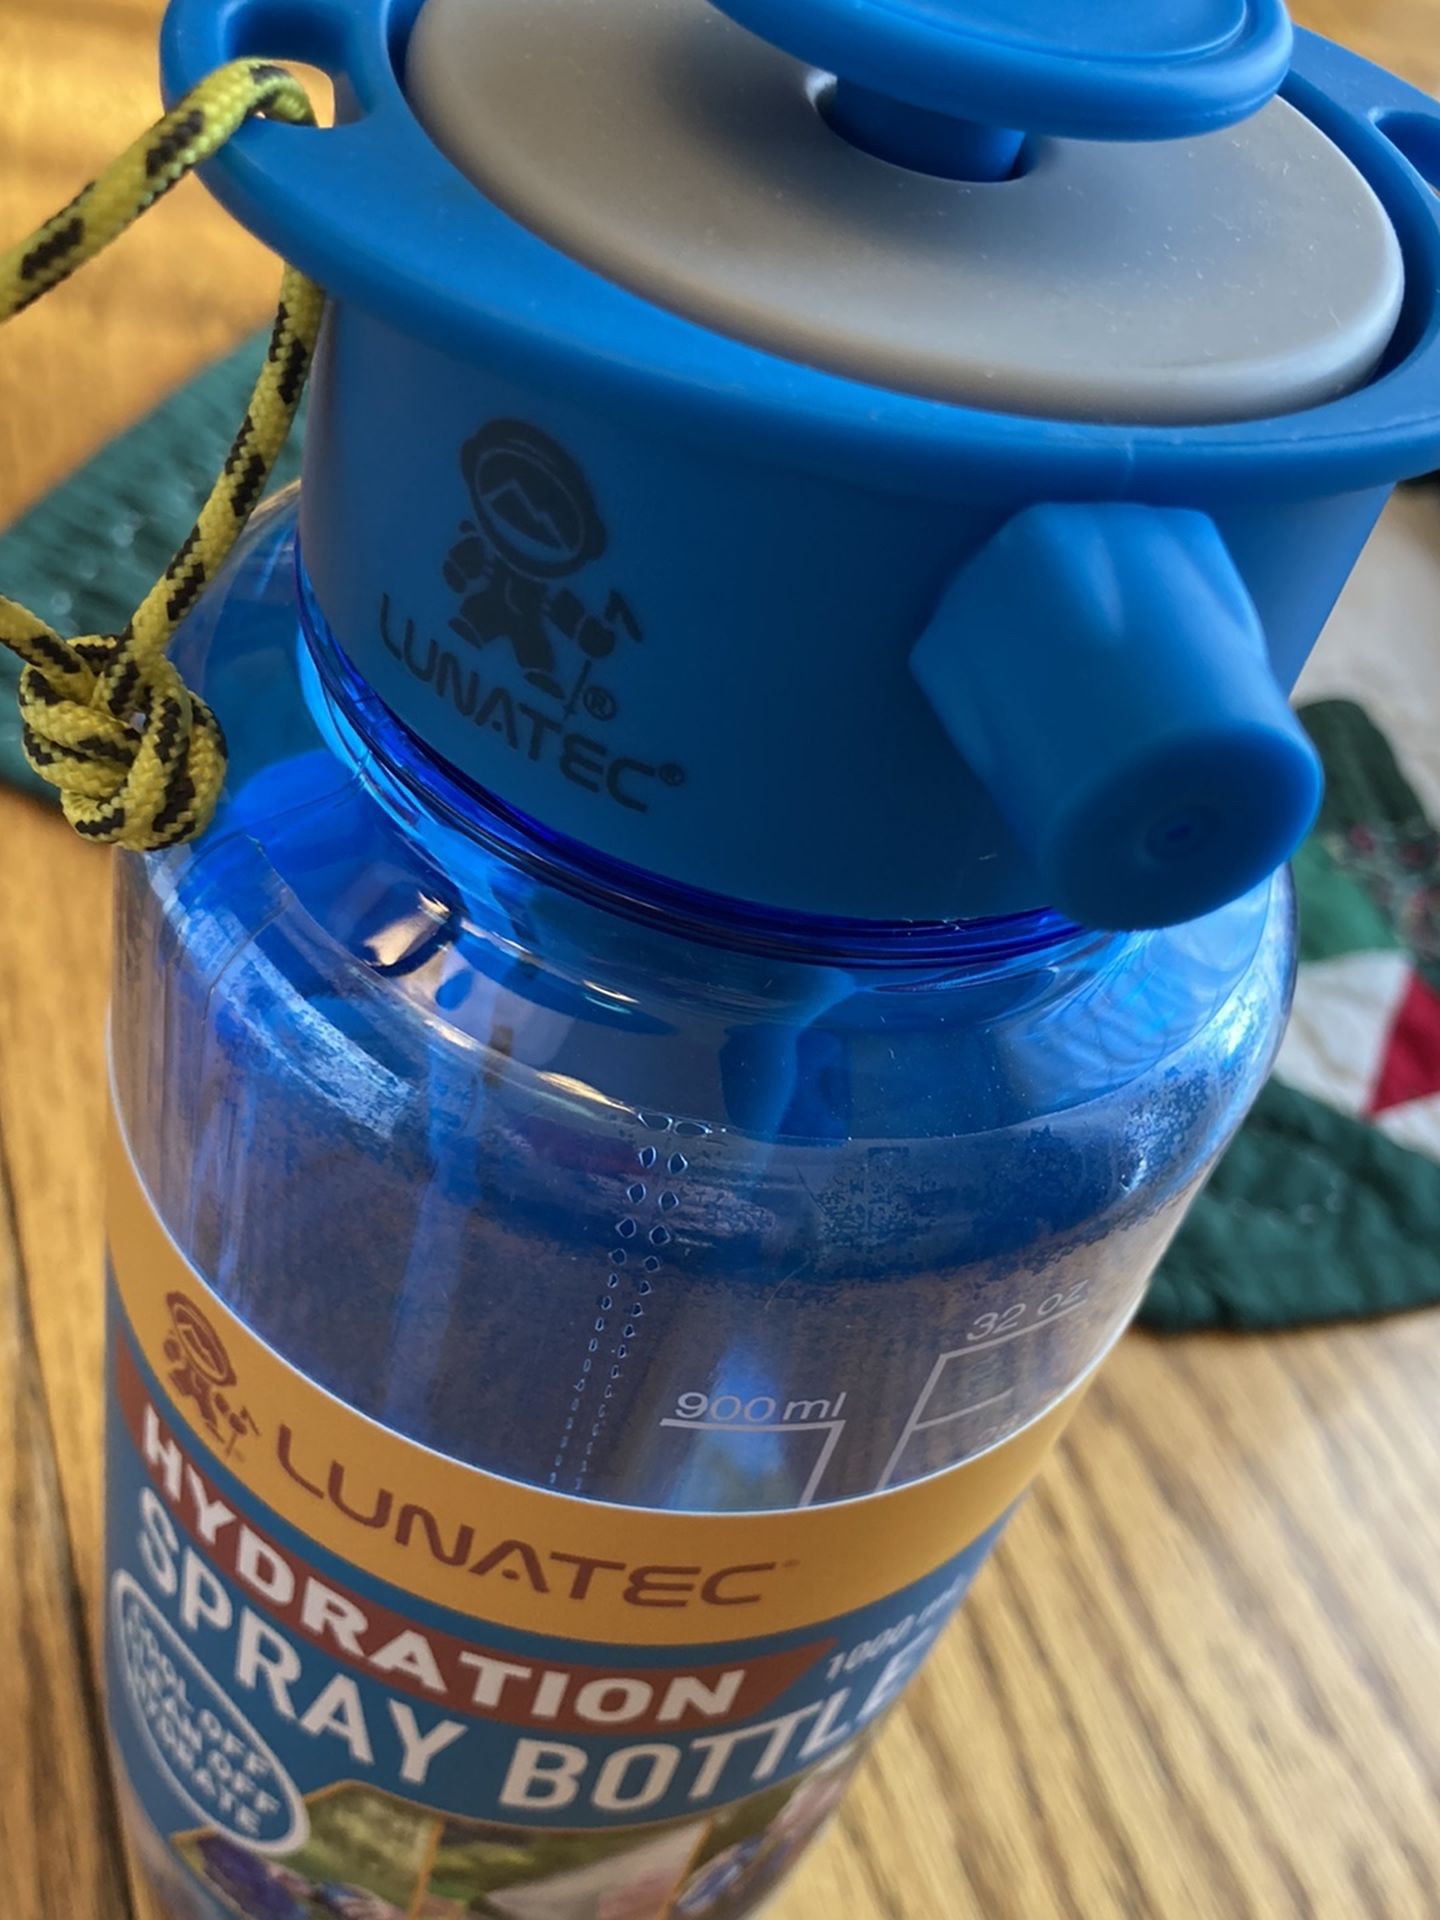 Lunatec Aquabot Hydration Bottle